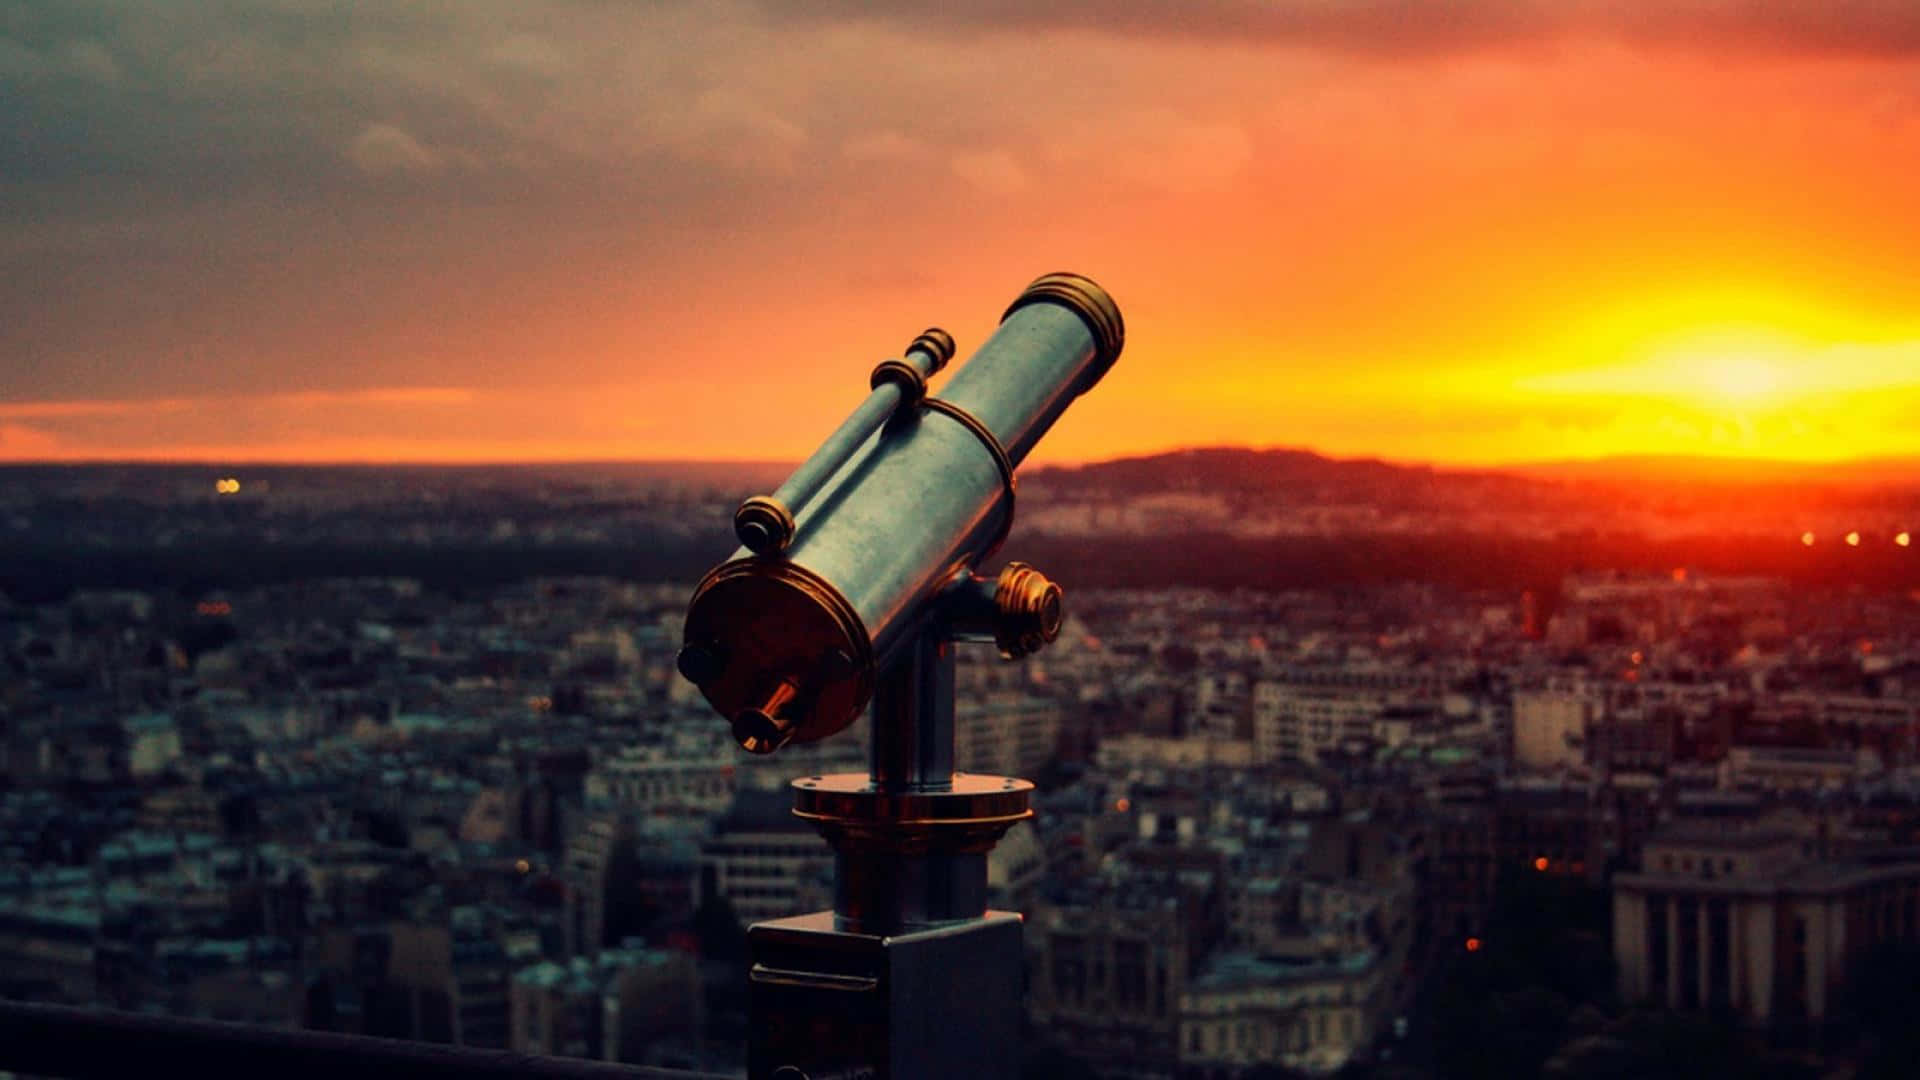 Telescope Sunset Picture